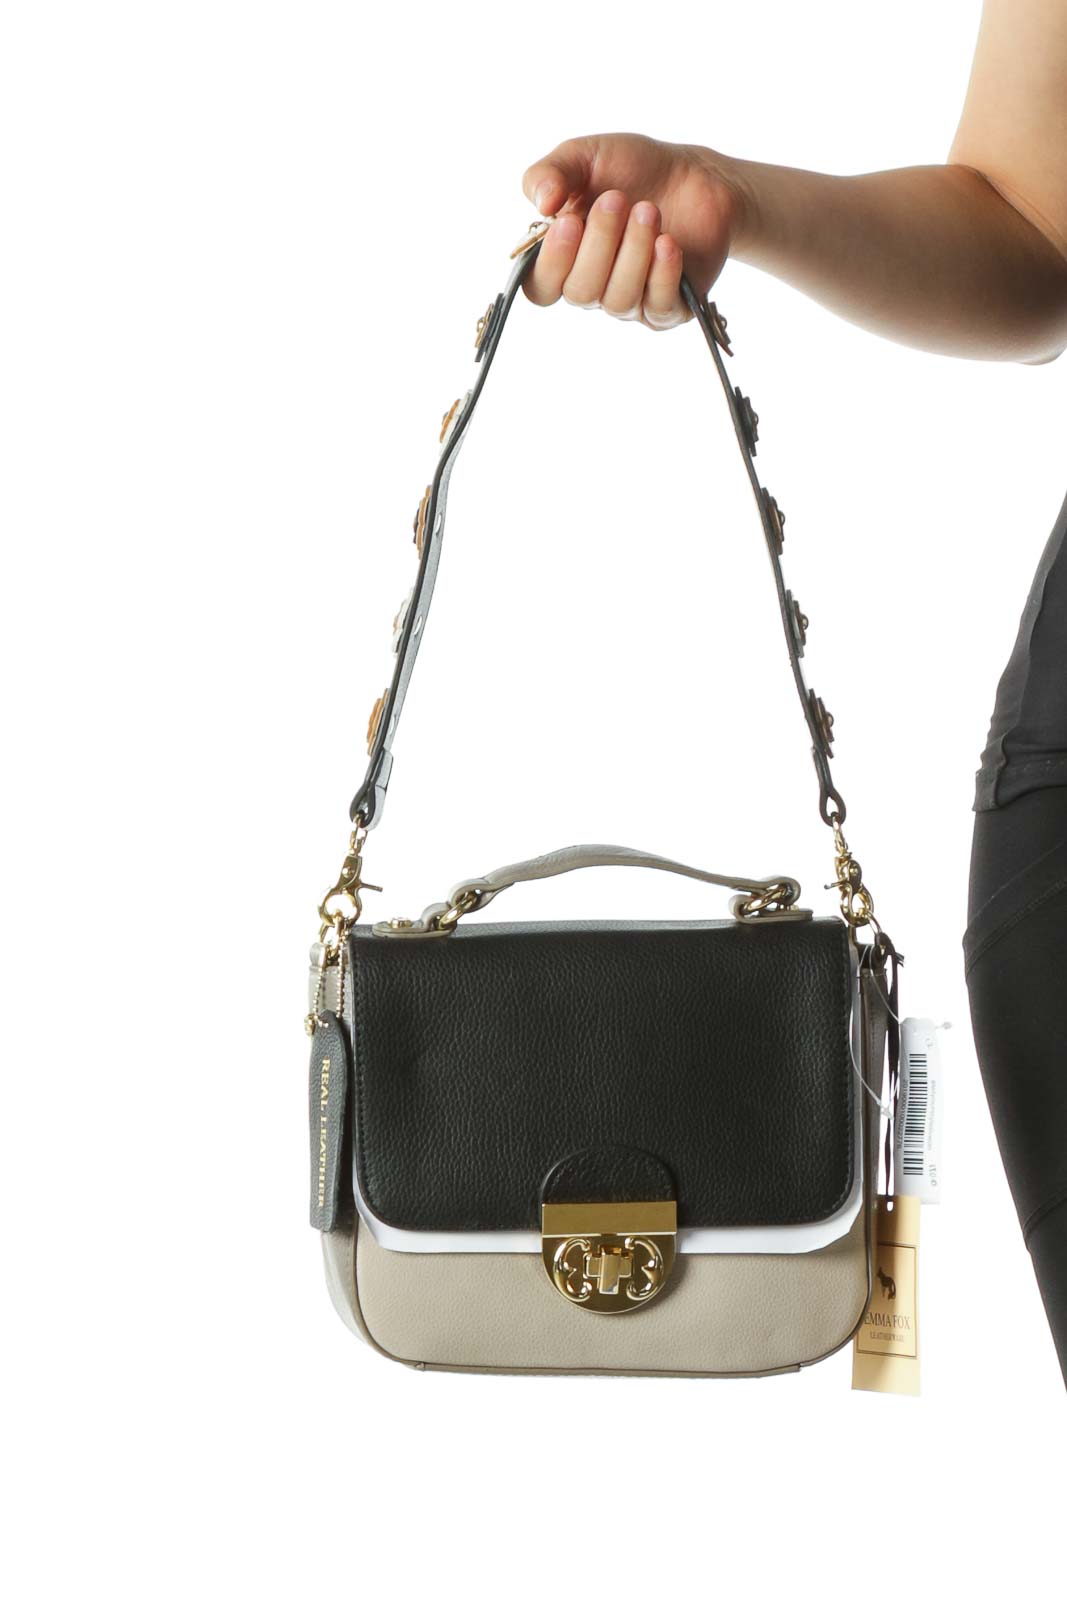 Emma Fox Bags Black Leather Kiss Lock Purse | Fox bag, Clothes design,  Fashion